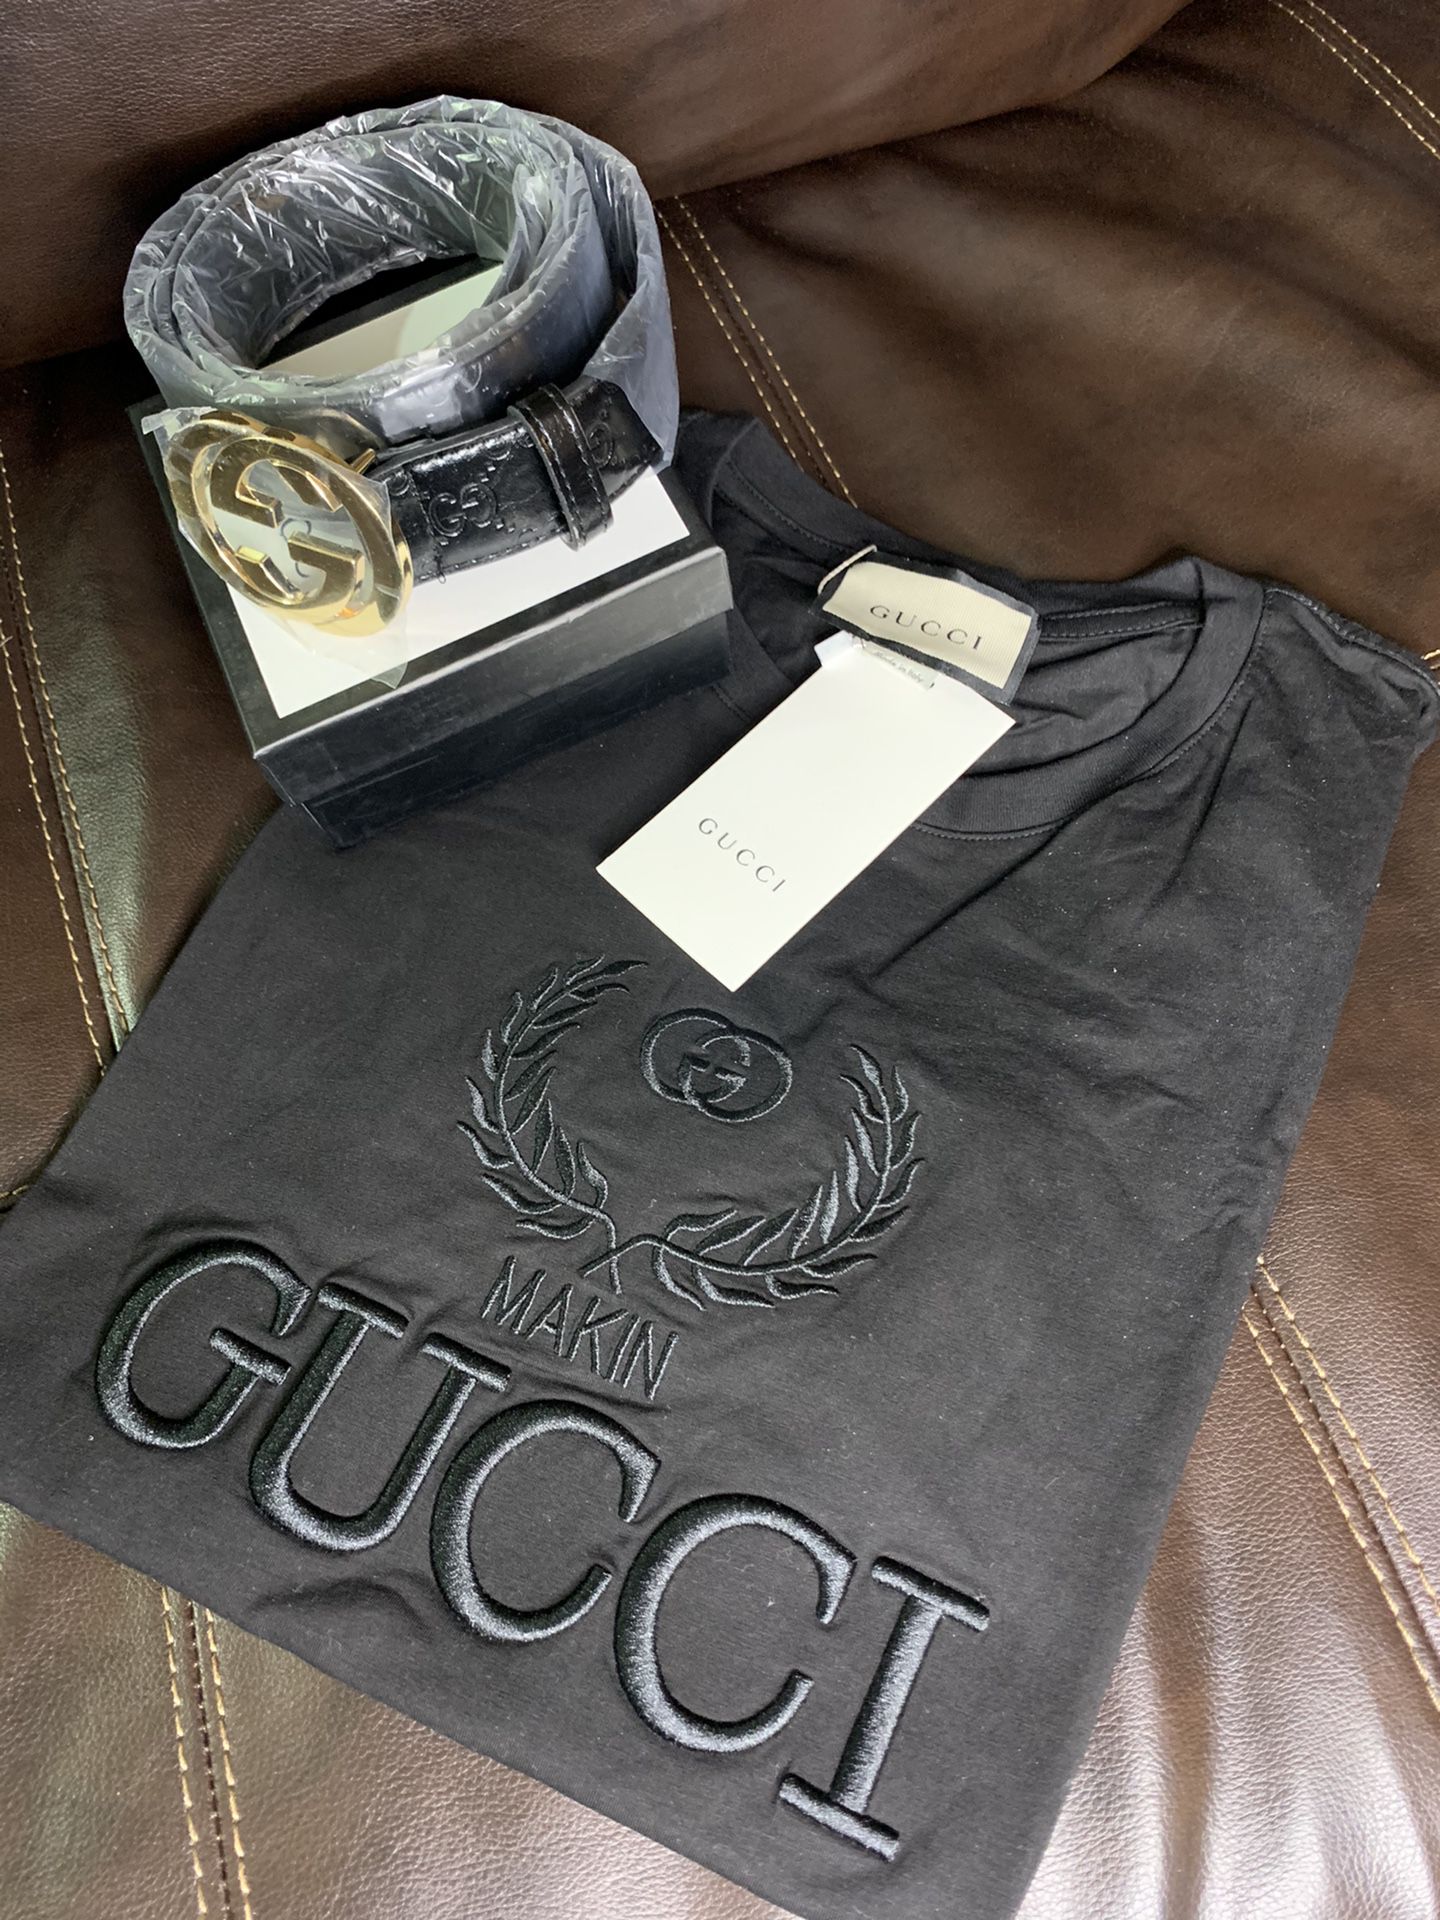 Gucci* shirt